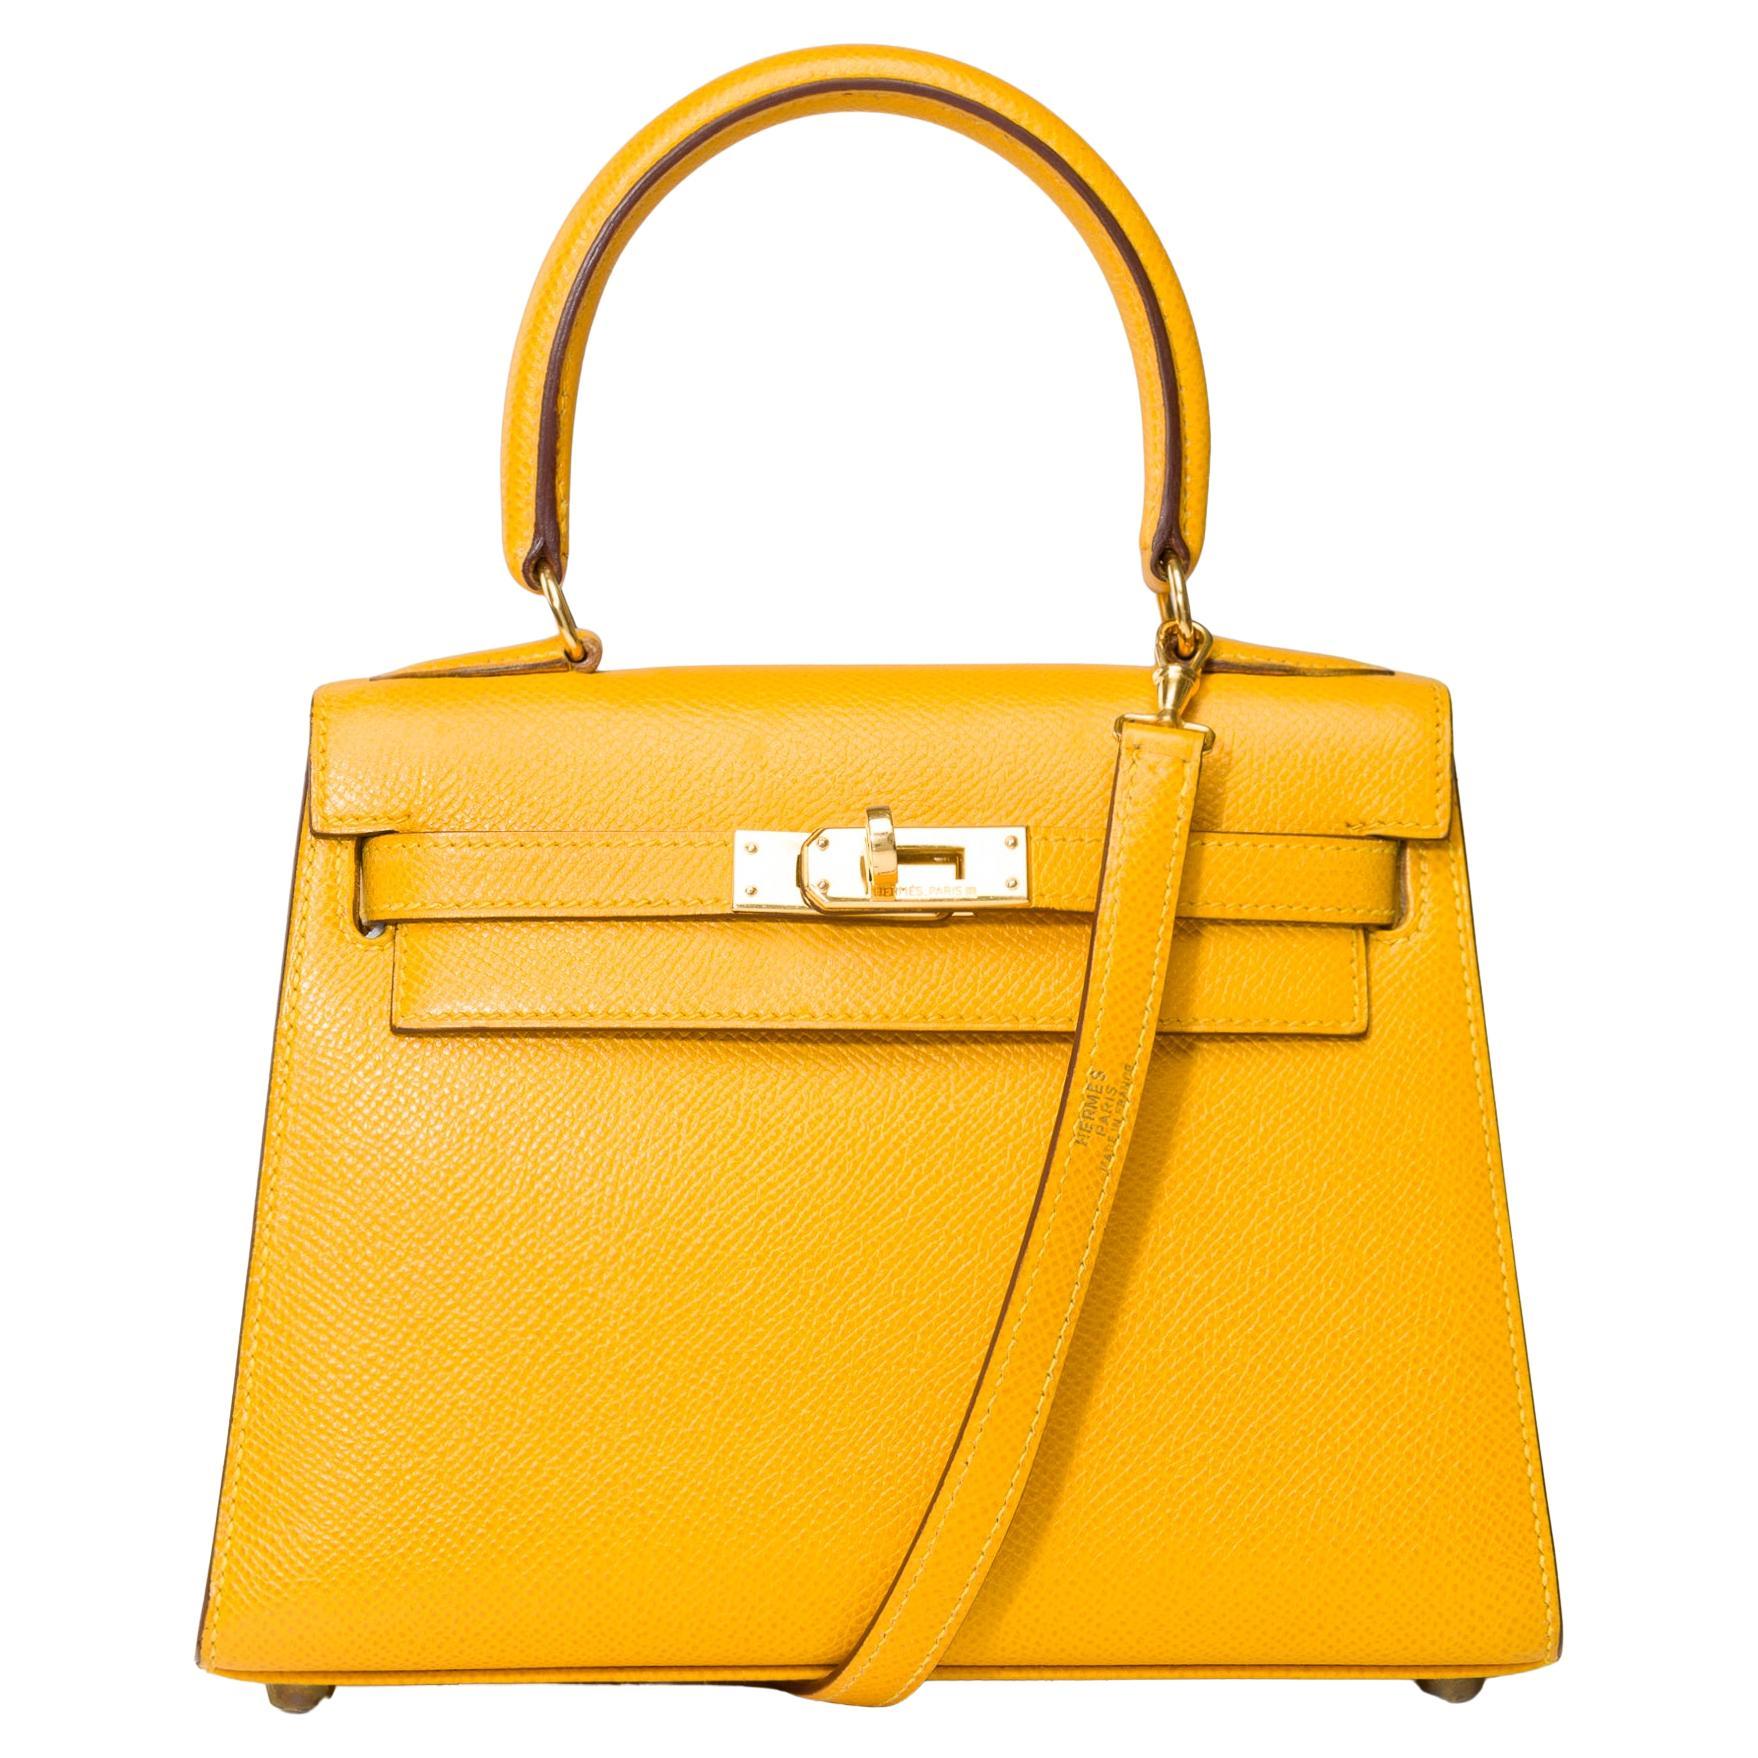 Rare Hermès Mini Kelly 20cm handbag strap in Amber Yellow Courchevel , GHW